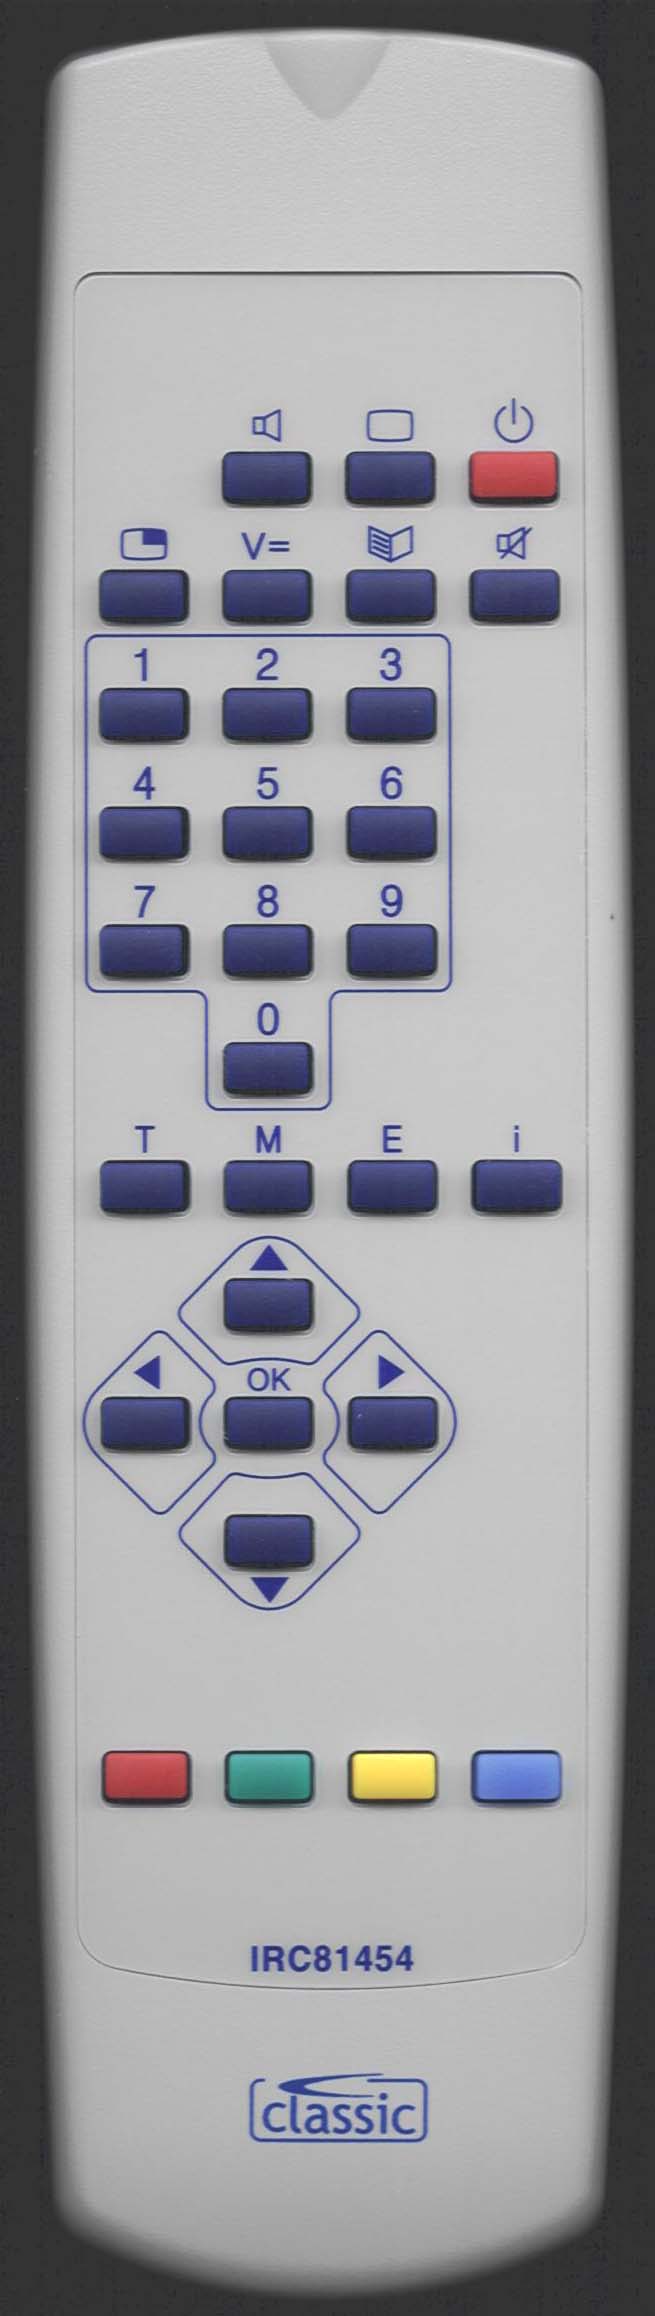 Loewe ARCADA 8684 Remote Control